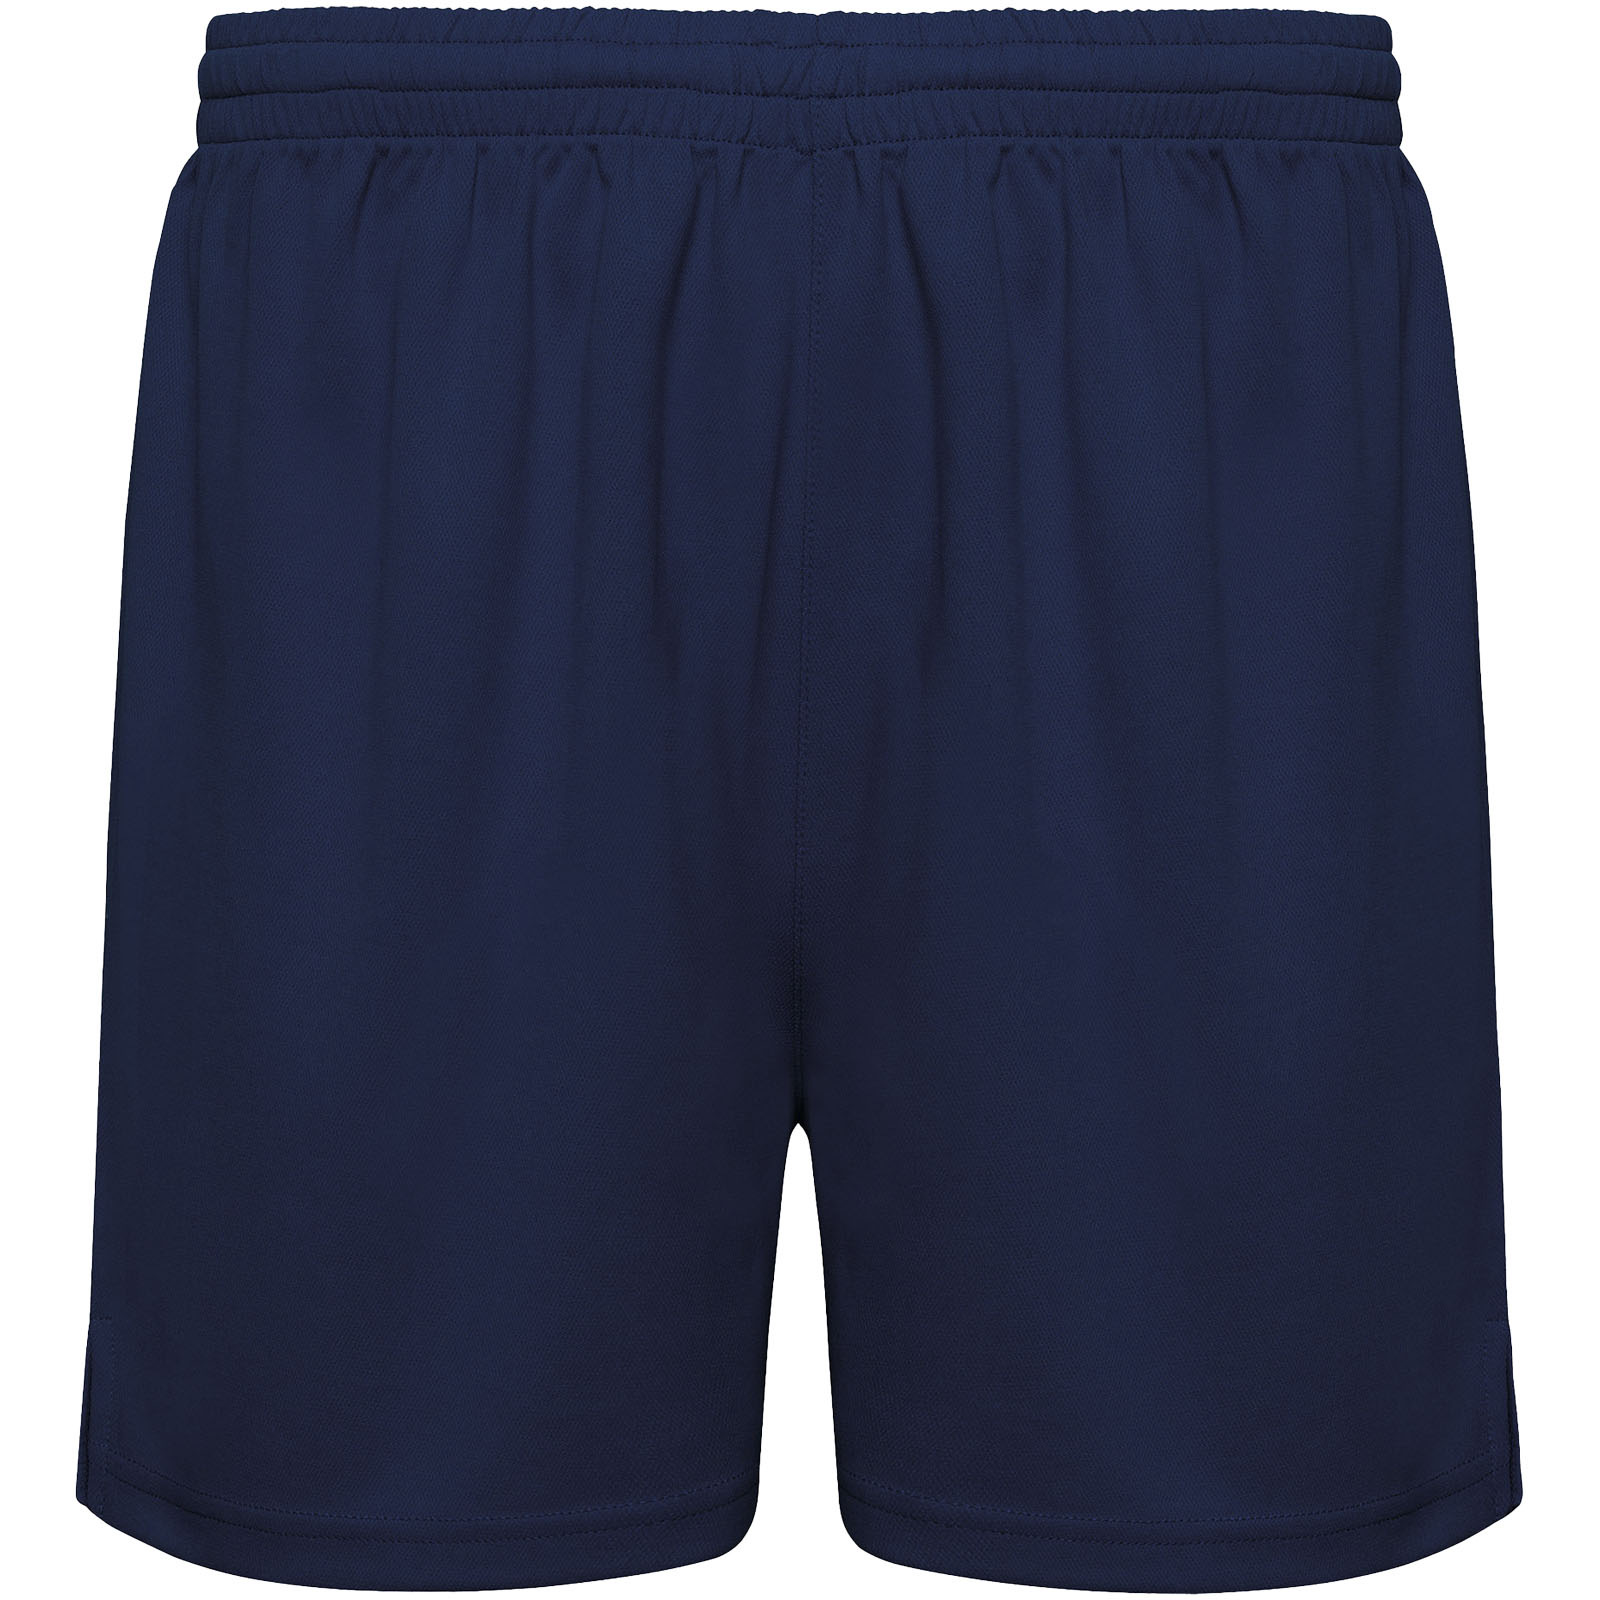 Advertising Shorts - Player unisex sports shorts